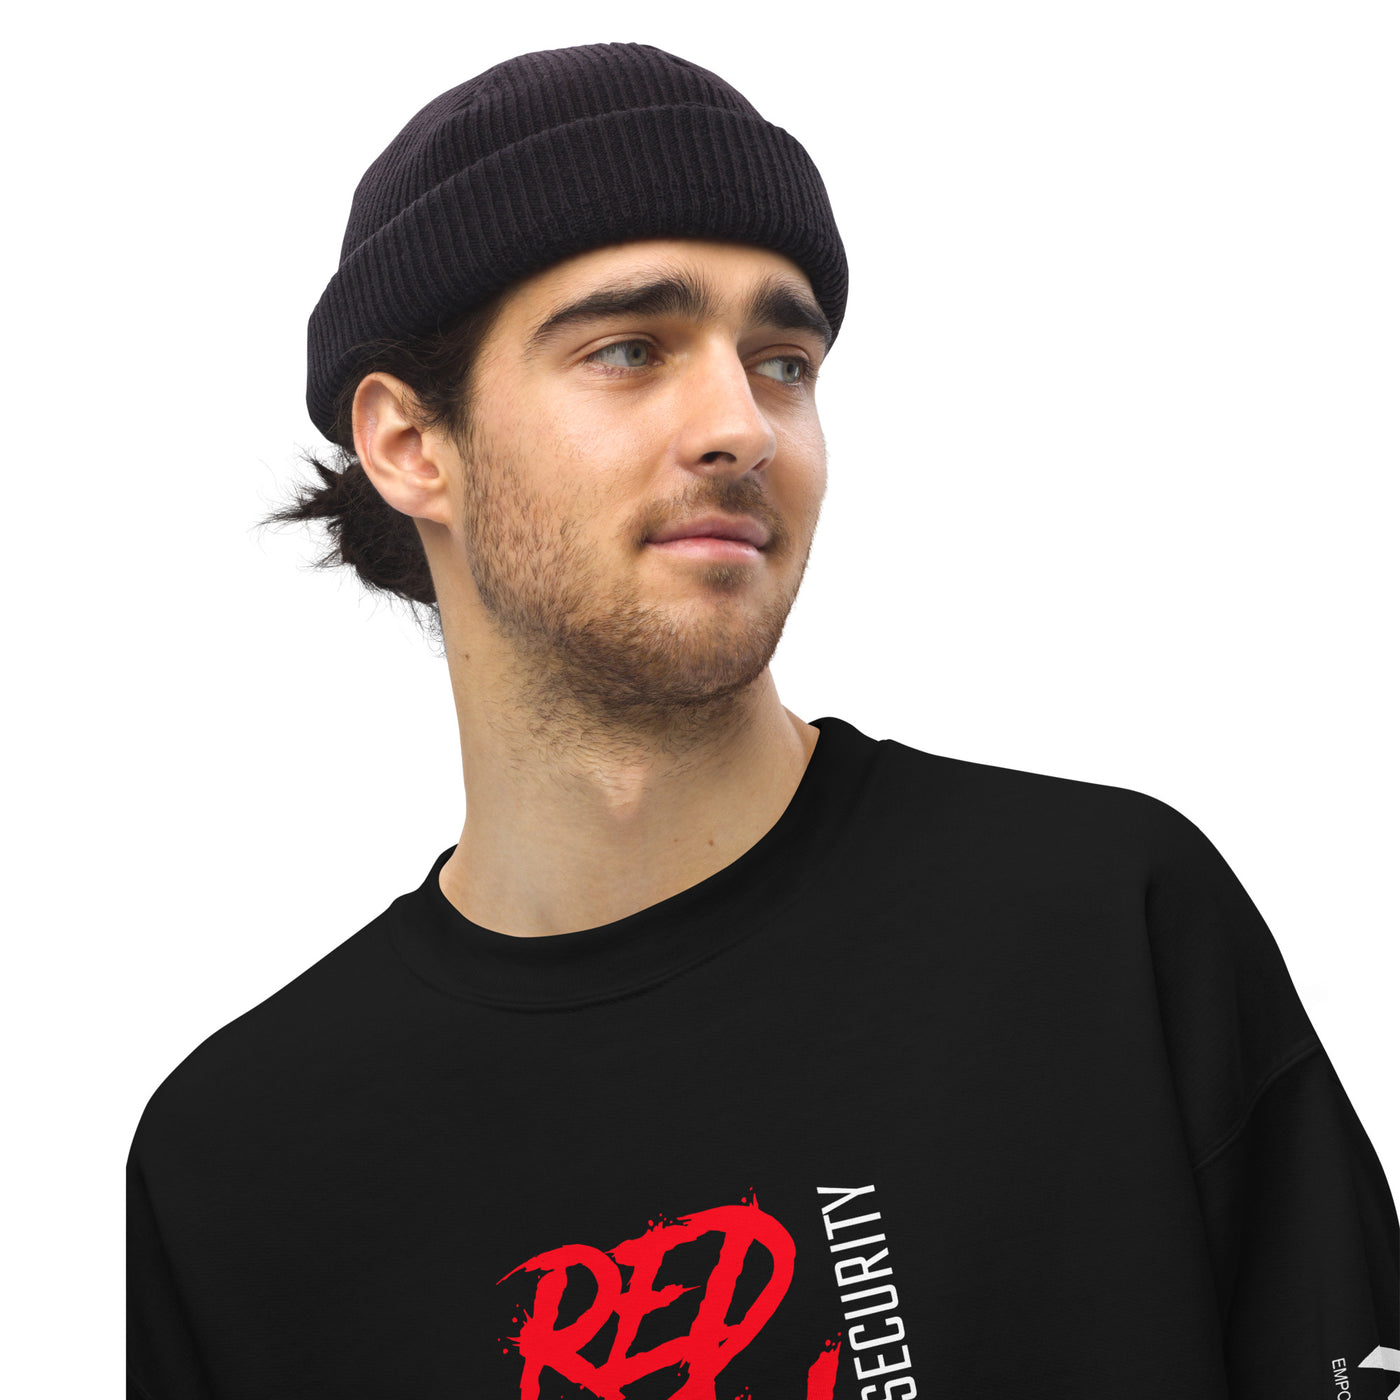 Cyber Security Red Team V6 - Unisex Sweatshirt